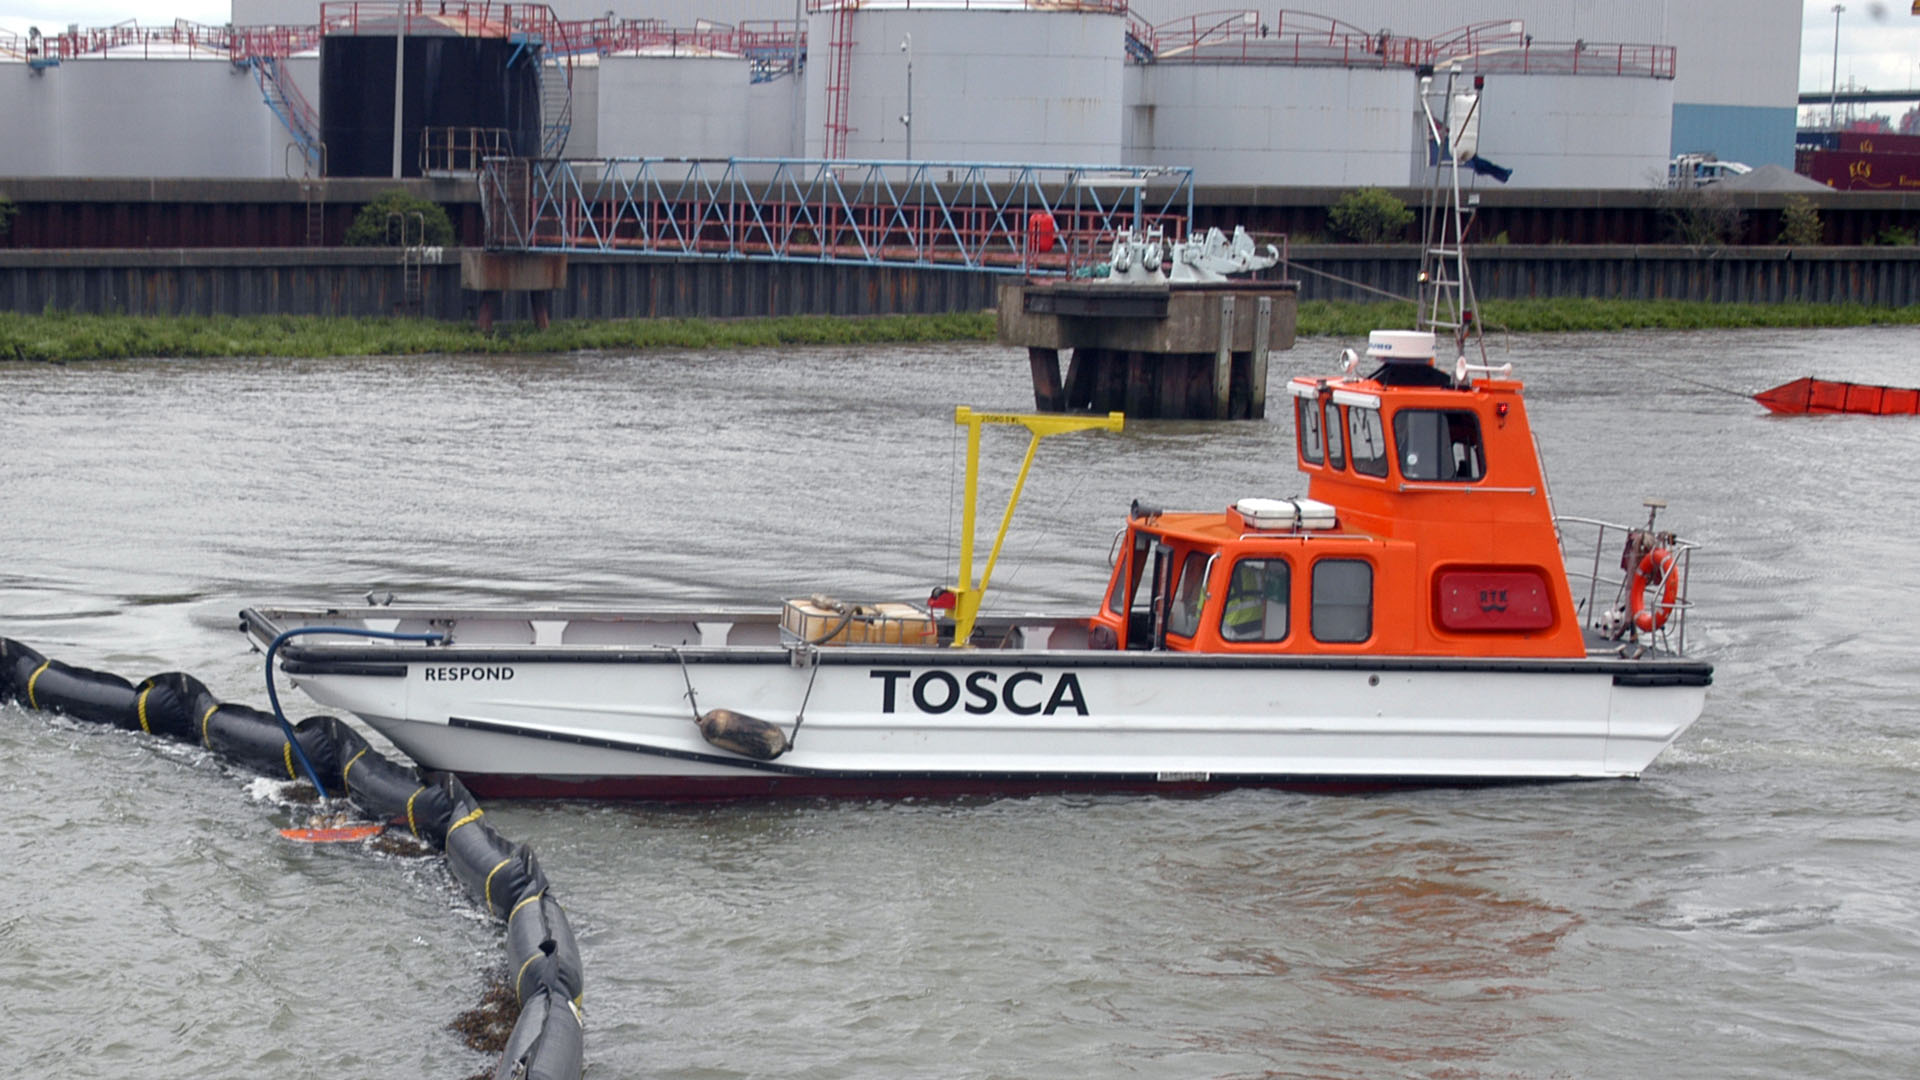 TOSCA Vessel, Respond